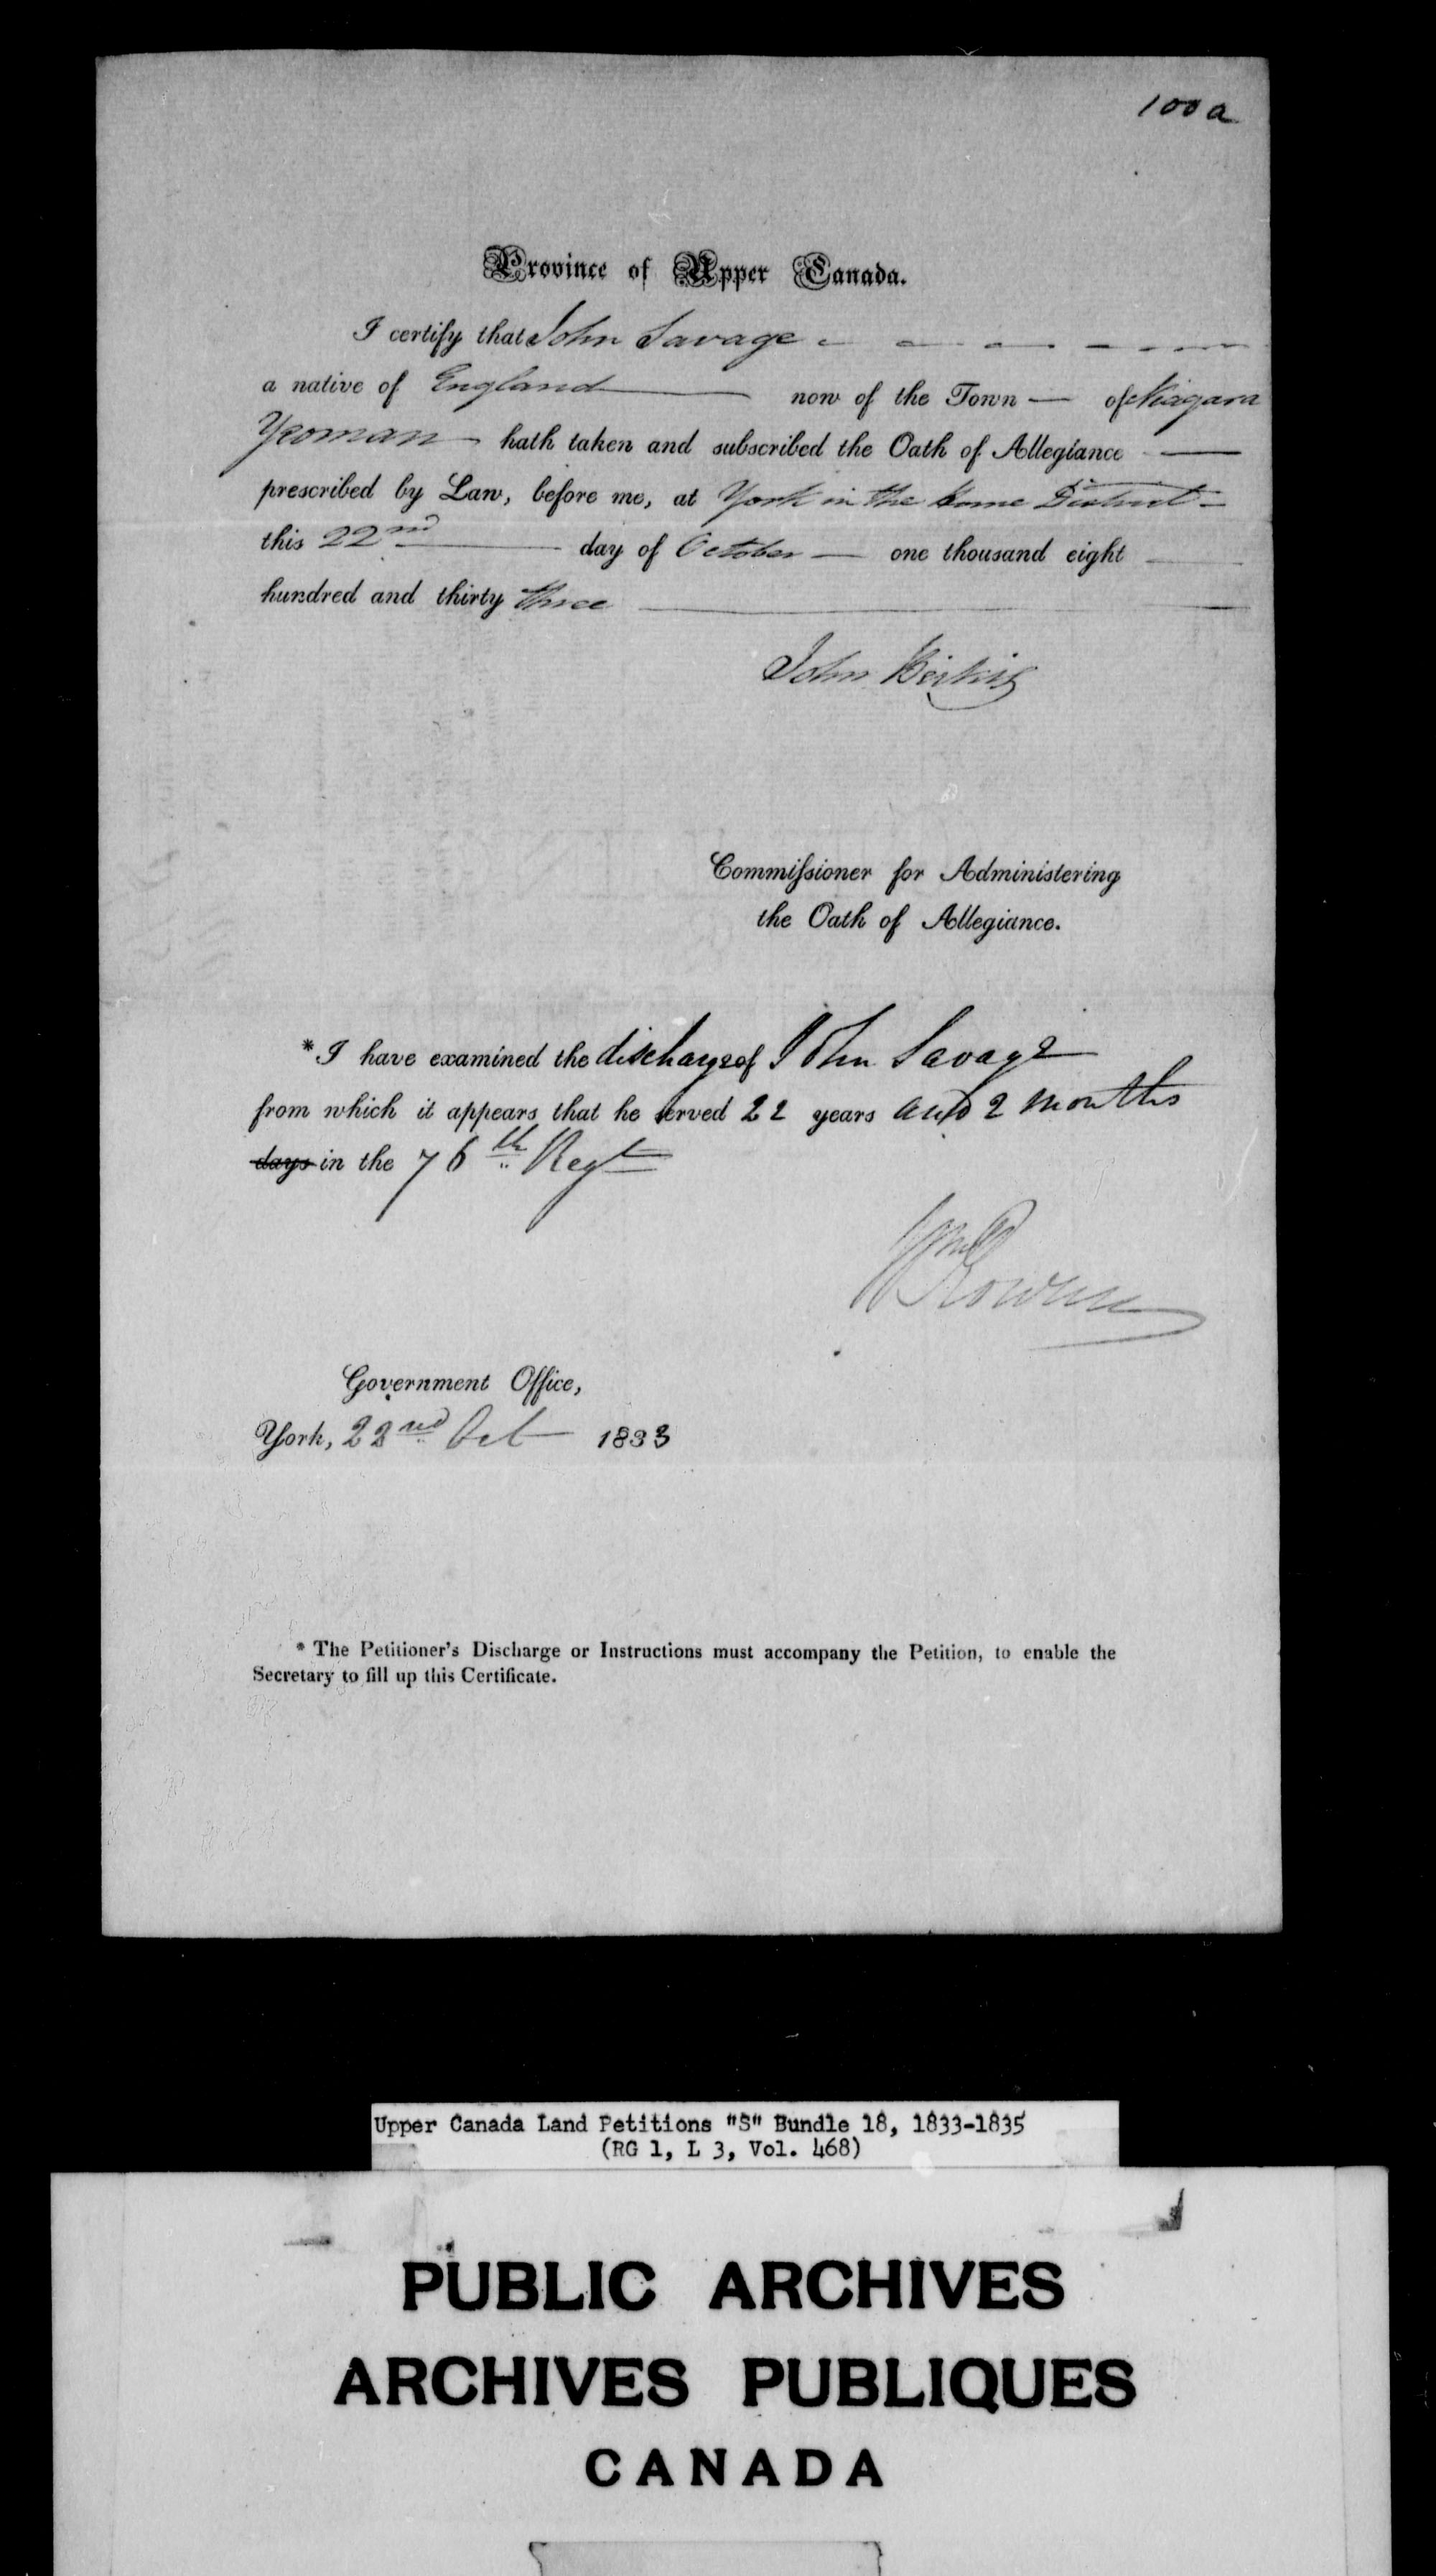 Titre : Demandes de terres du Haut-Canada (1763-1865) - N d'enregistrement Mikan : 205131 - Microforme : c-2817